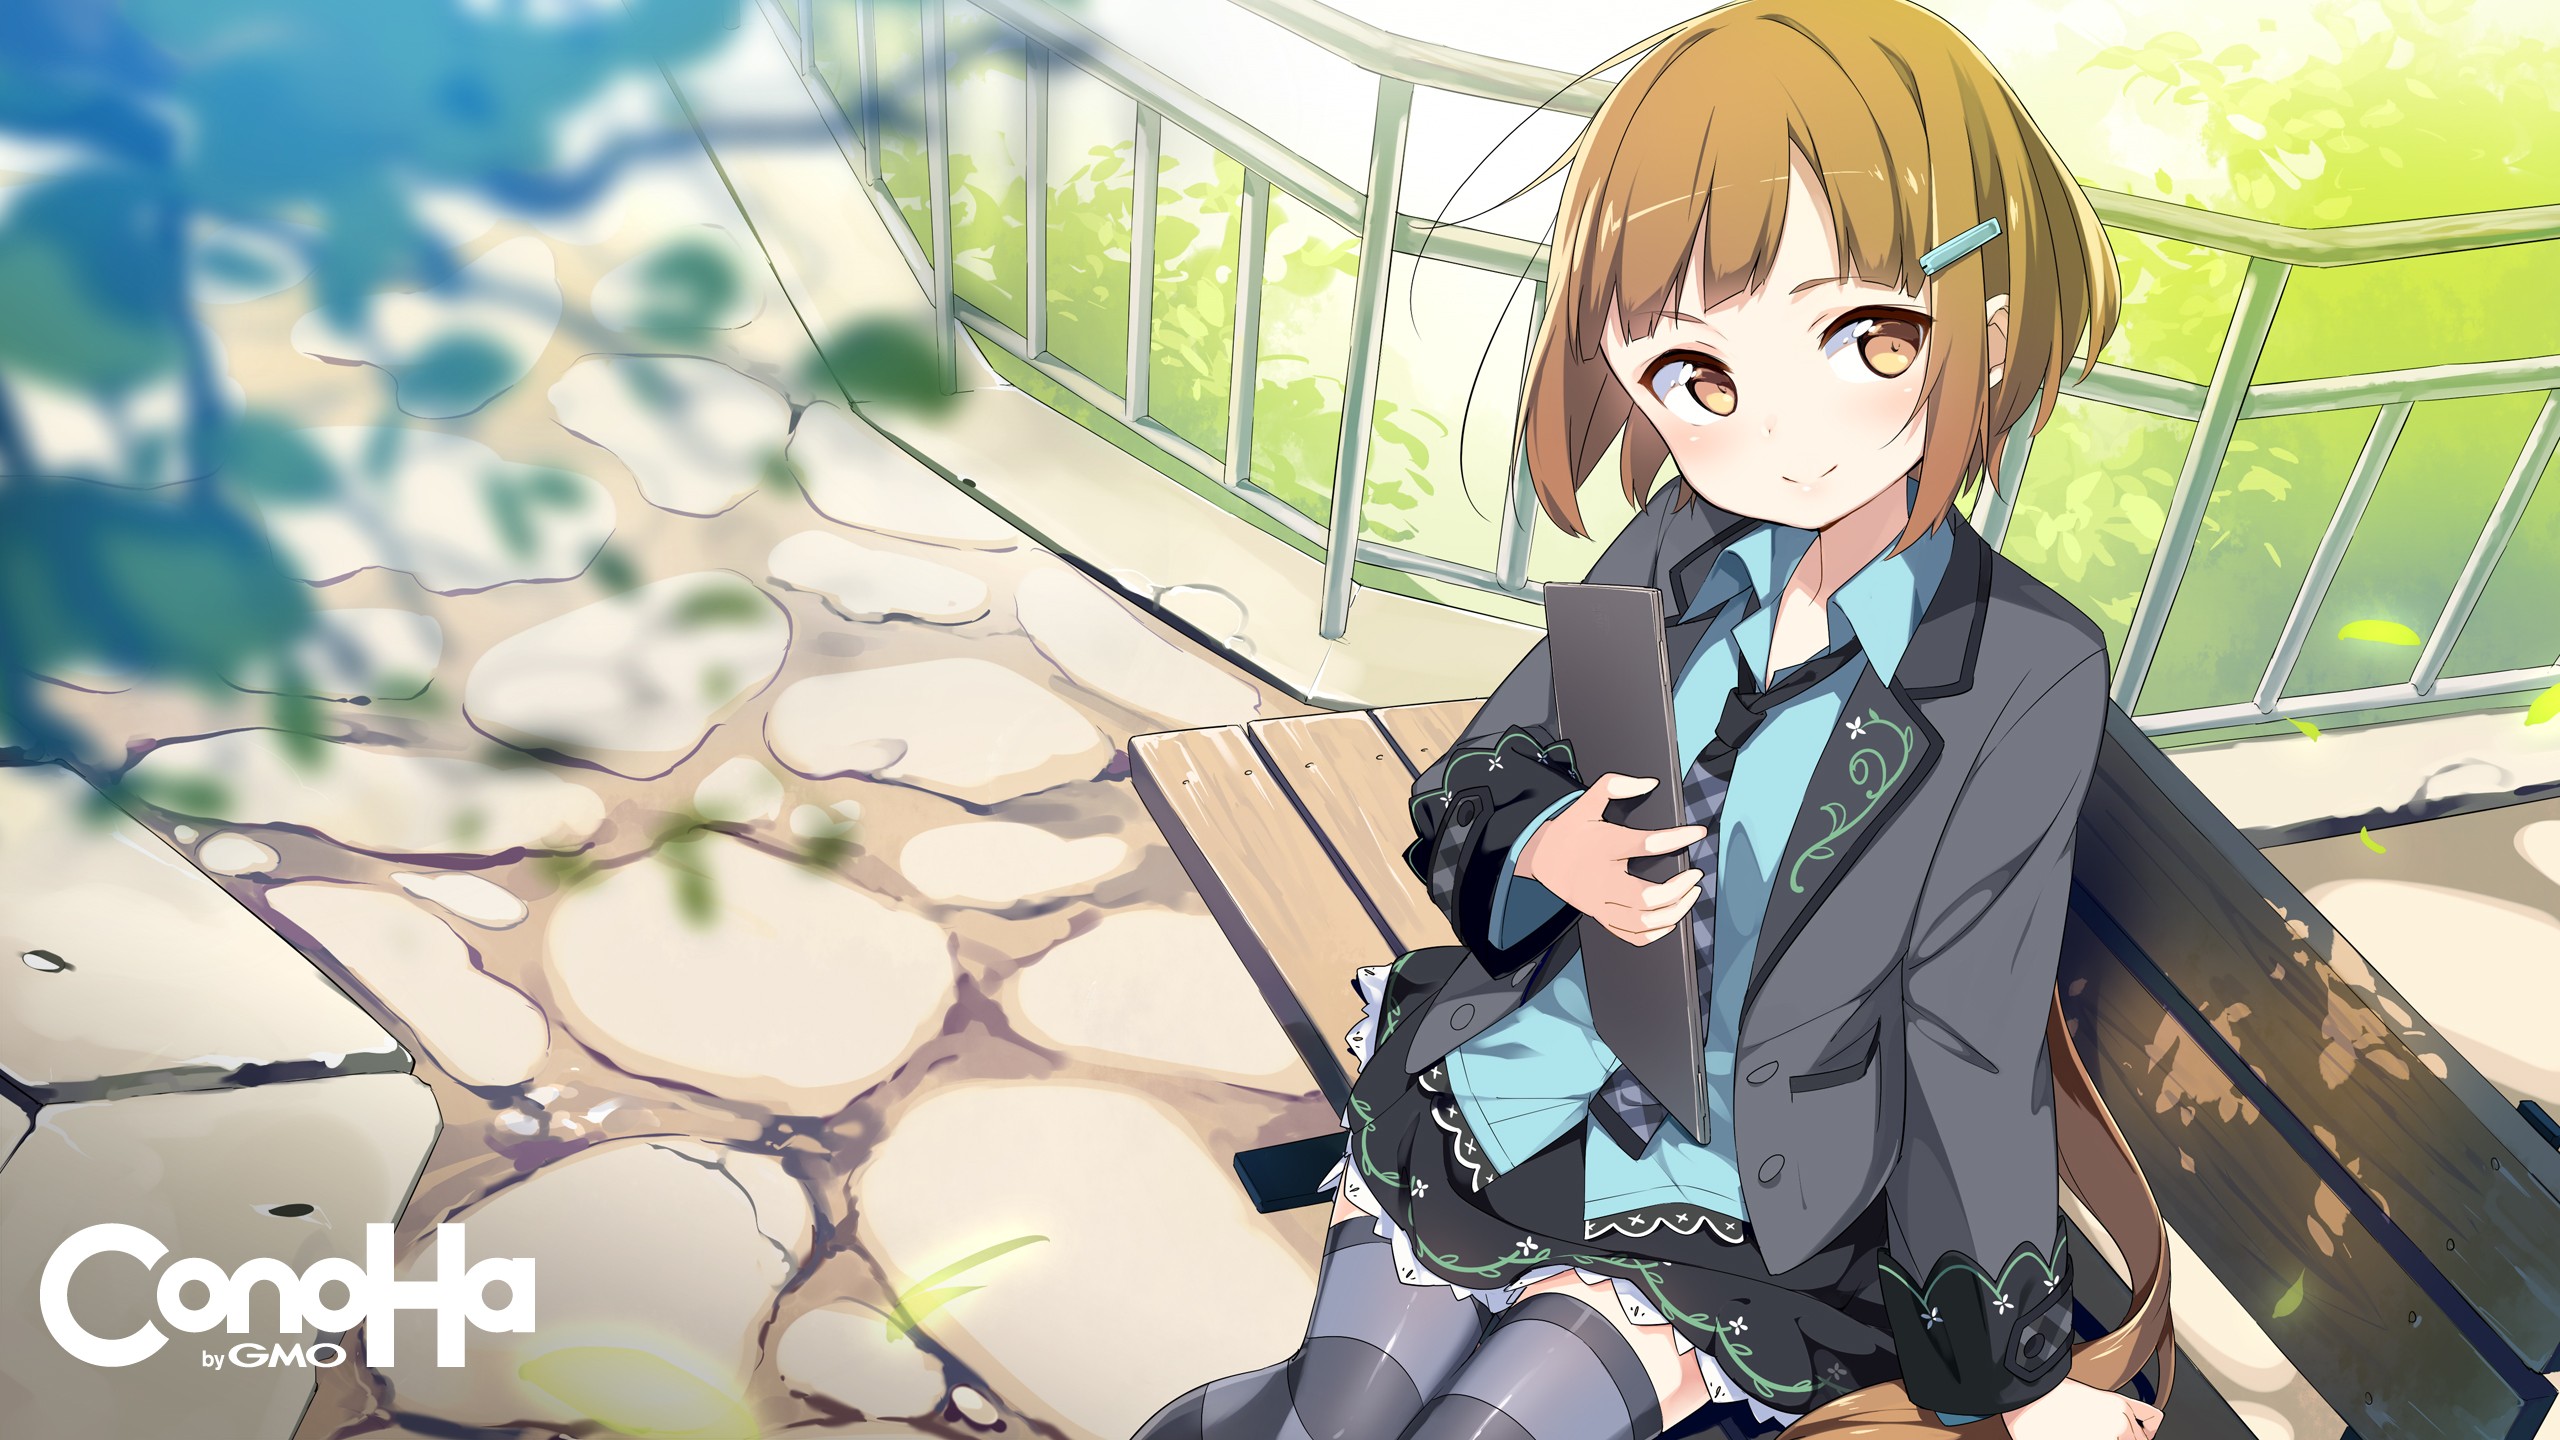 Anime 2560x1440 anime anime girls Mikumo Conoha tie smiling bench sitting striped stockings shoulder length hair